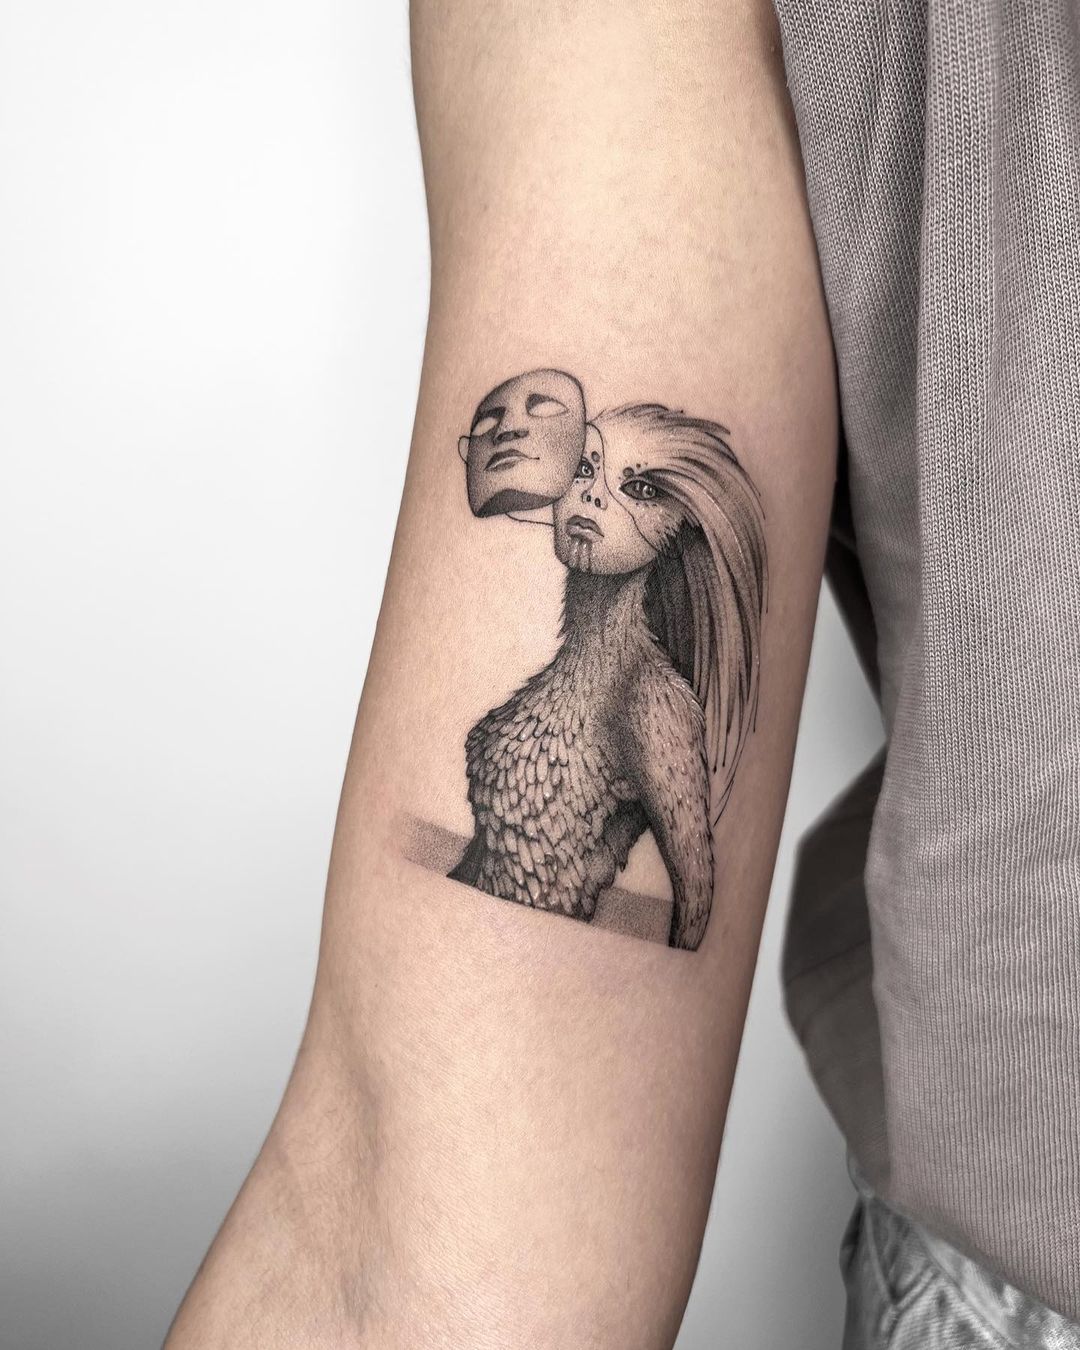 alien tattoos on arm by acra.tattoos